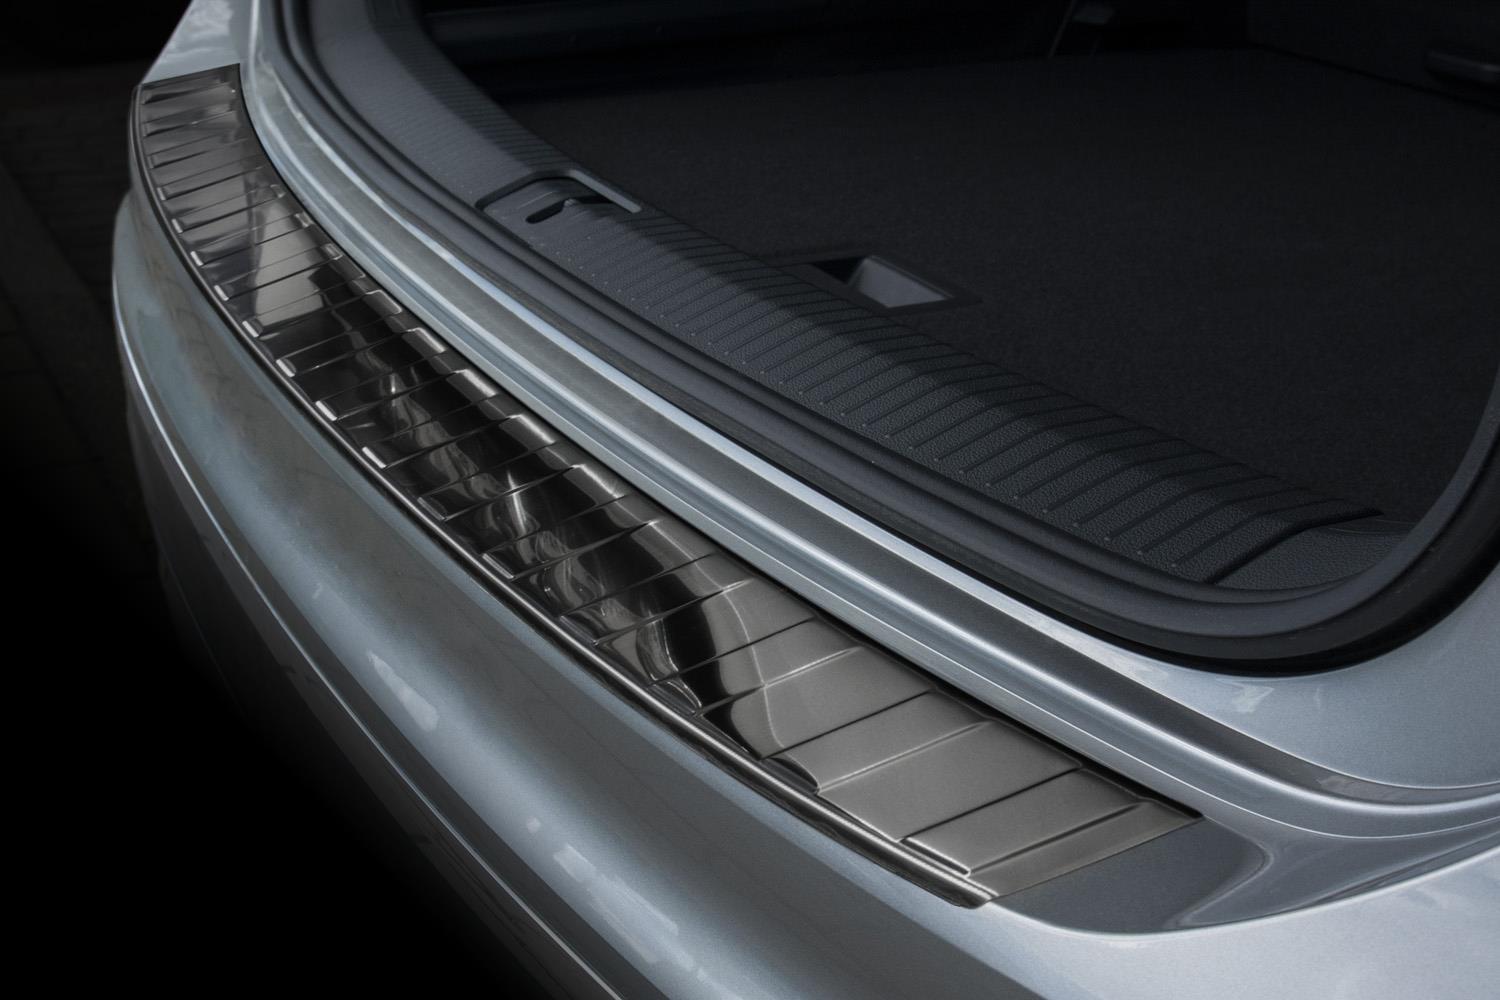 https://www.carparts-expert.com/images/stories/virtuemart/product/vw16tibp-volkswagen-tiguan-ii-2015-rear-bumper-protector-stainless-steel-high-gloss-black-1.jpg